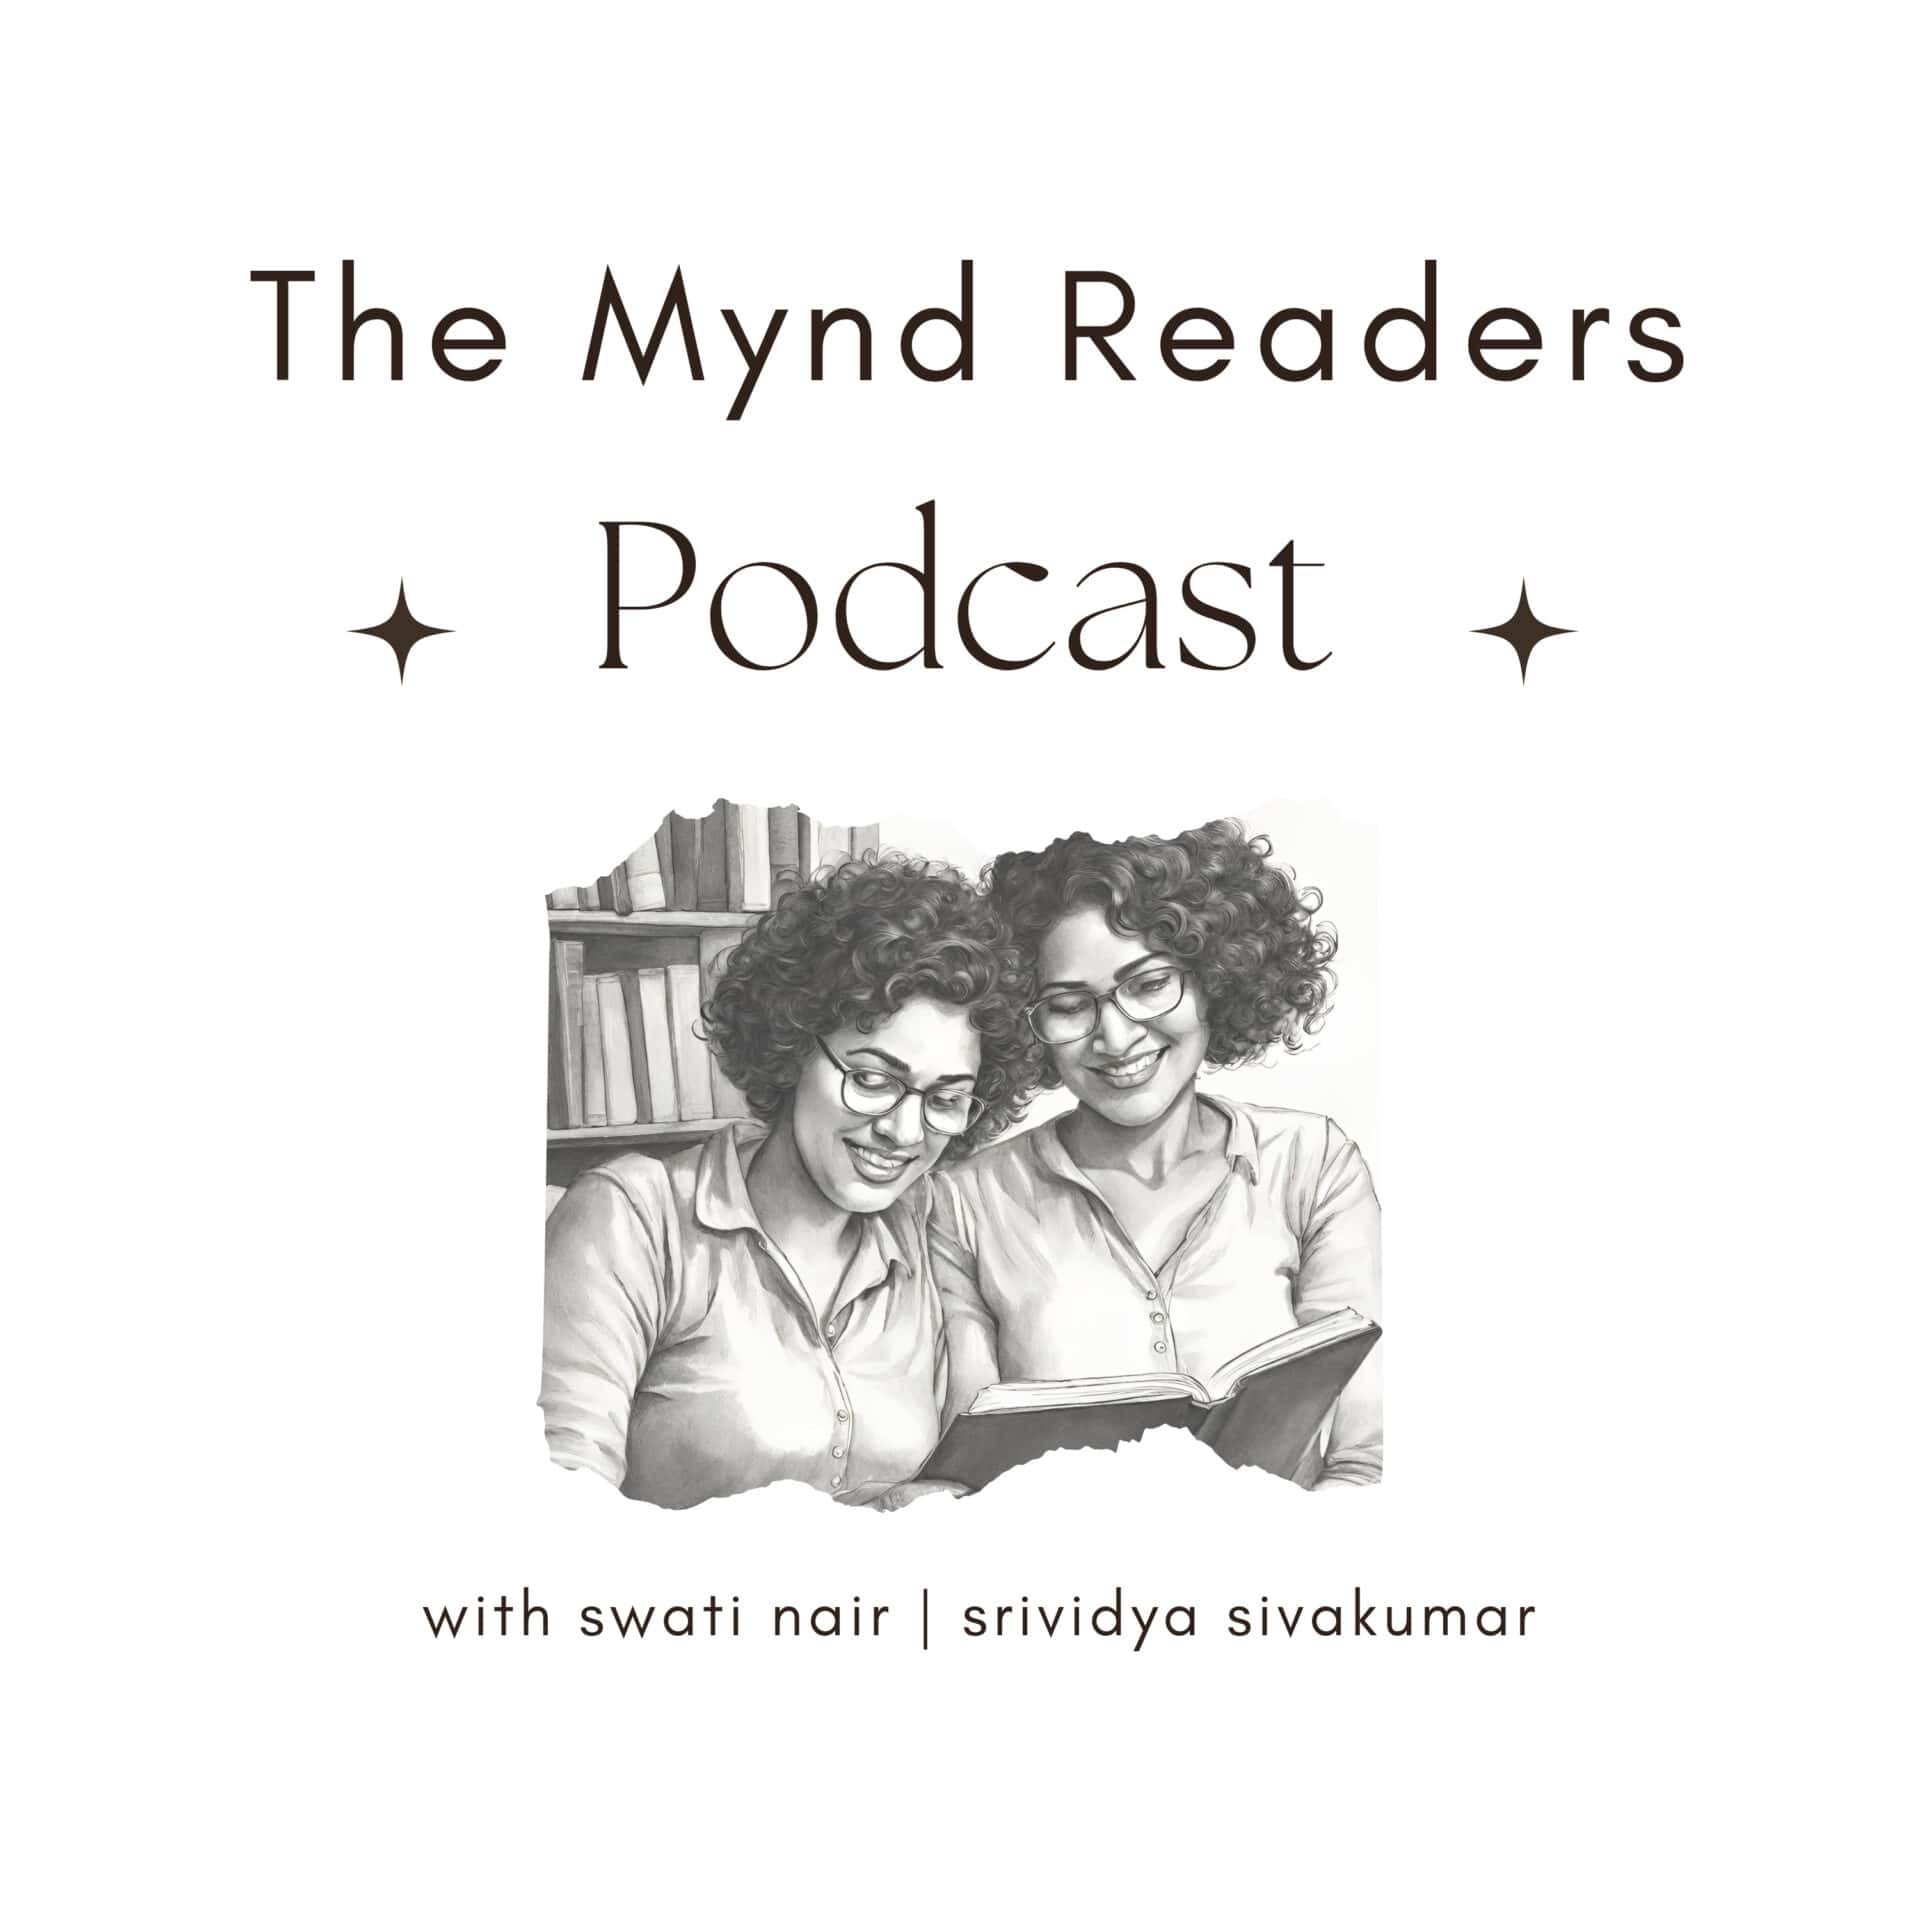 The Mynd Readers